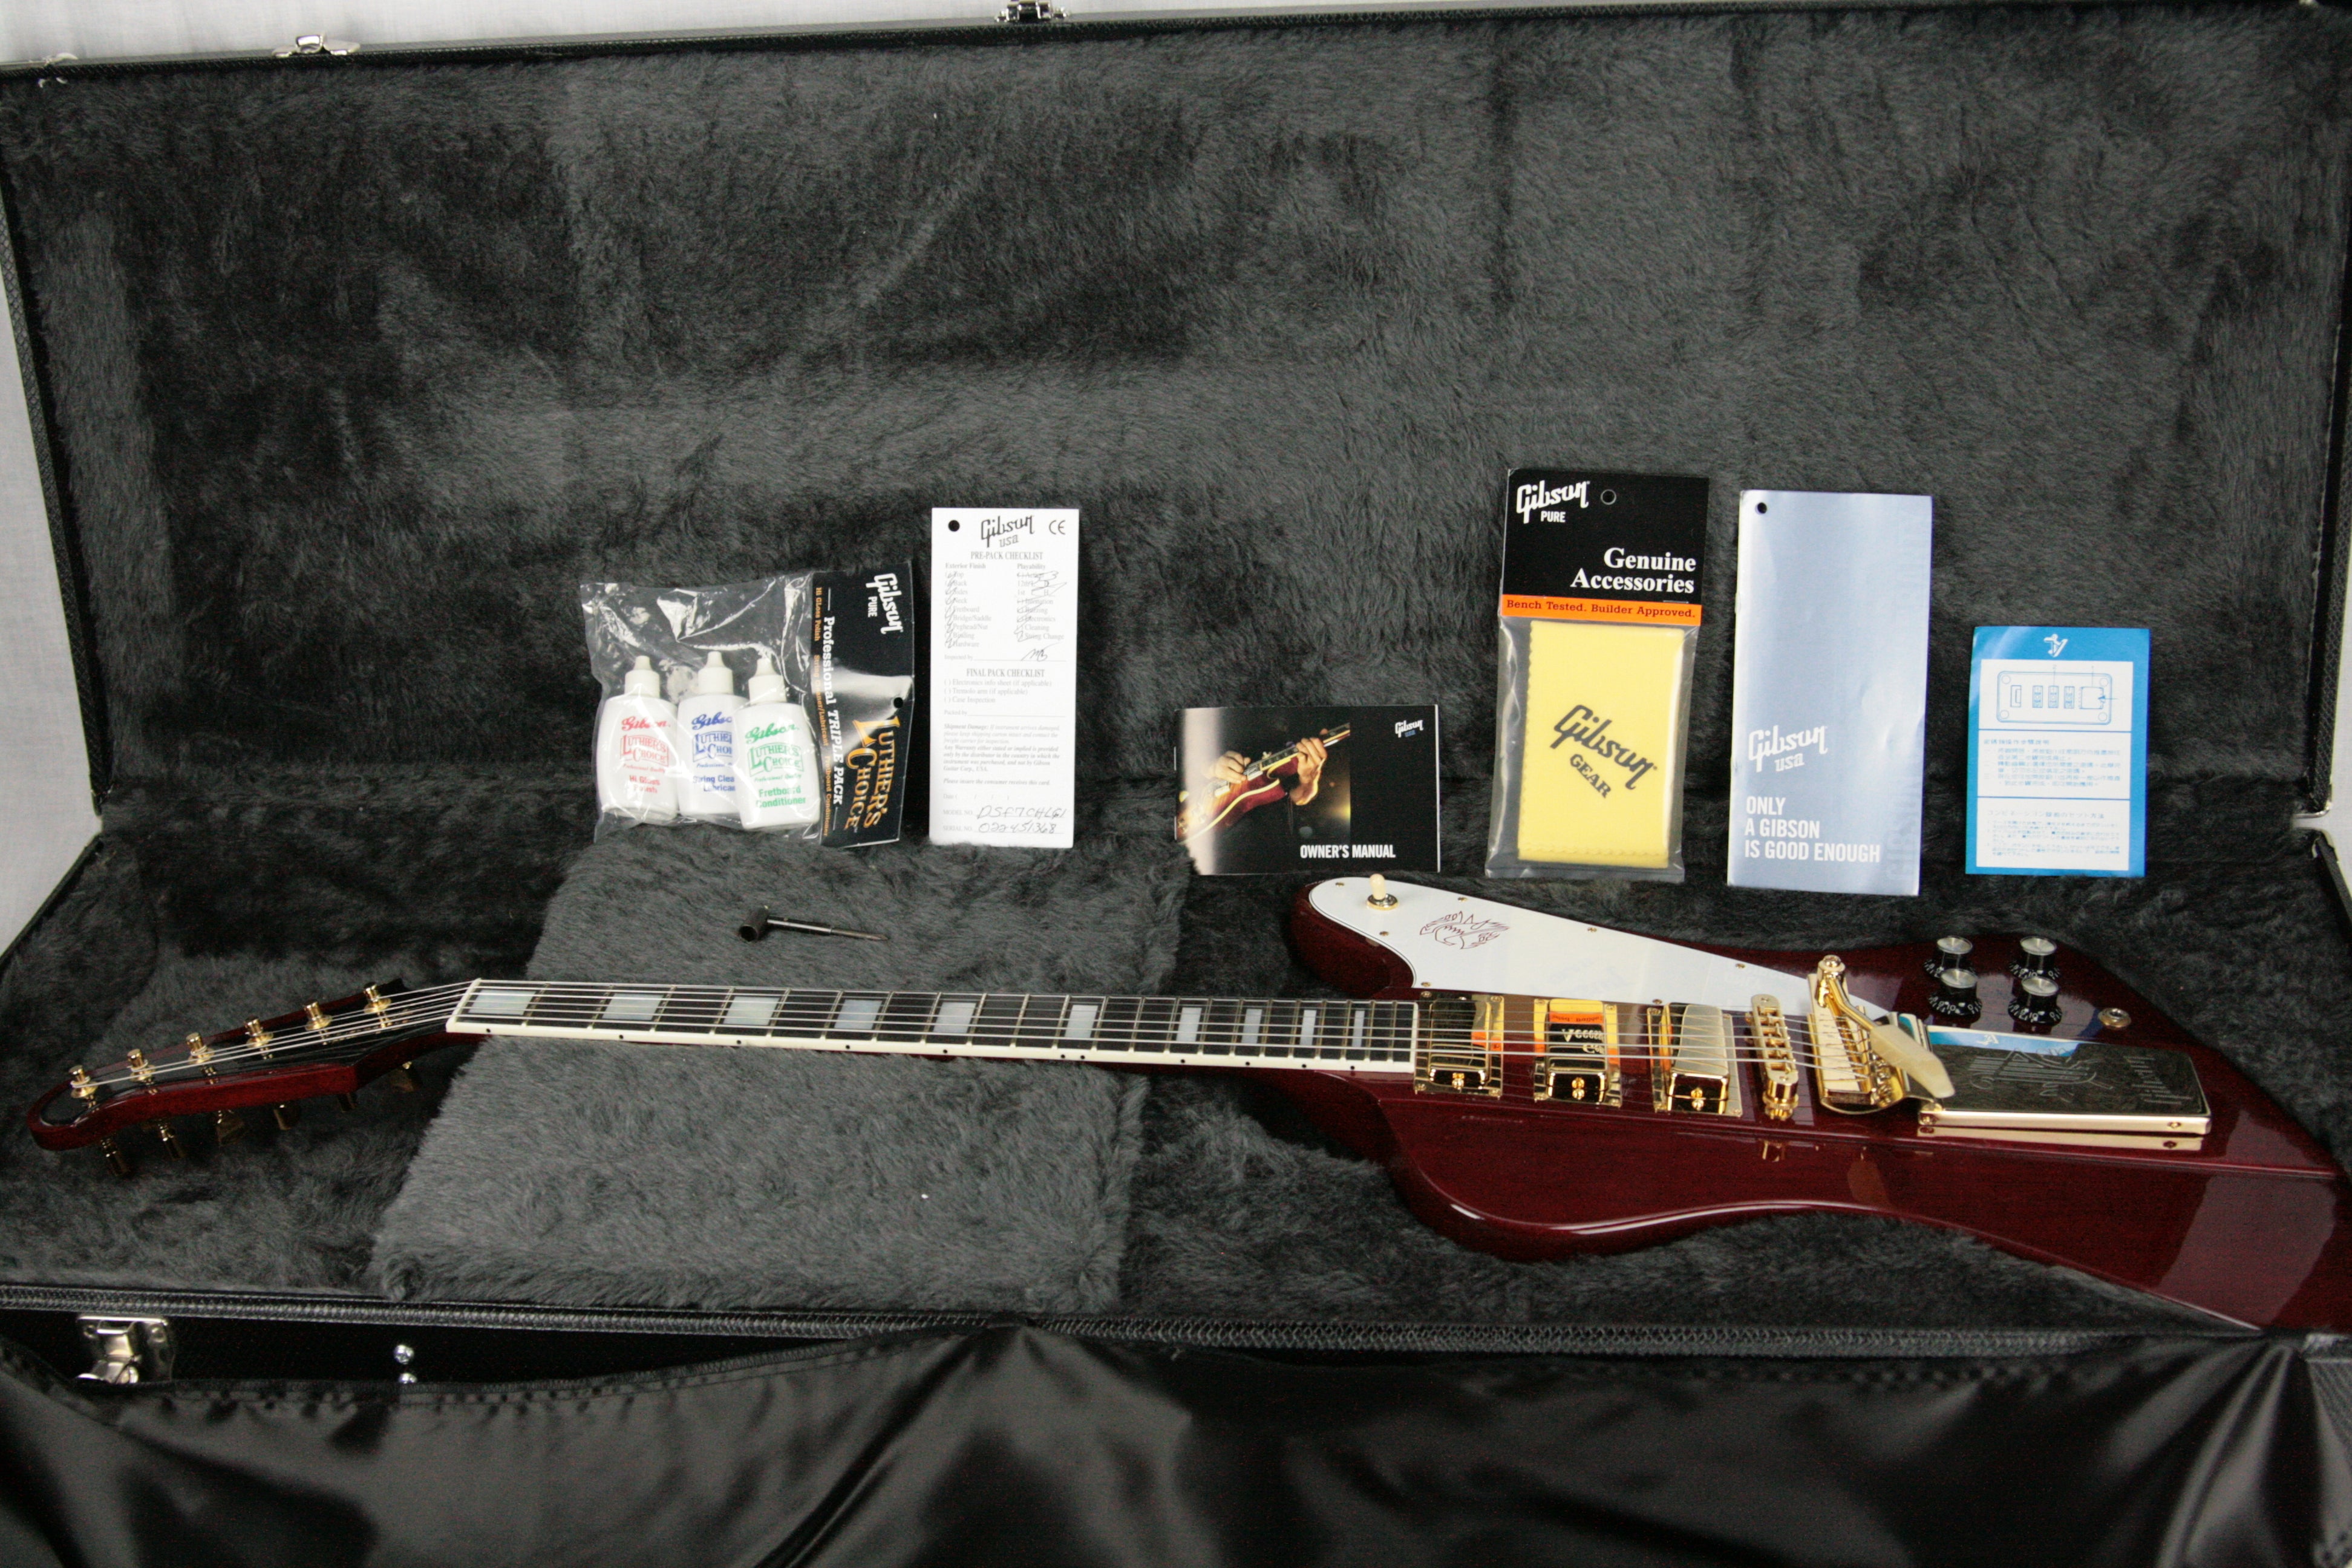 *SOLD*  2005 Gibson Firebird VII Cherry Red! EBONY Board! Limited Edition MINTY! Maestro